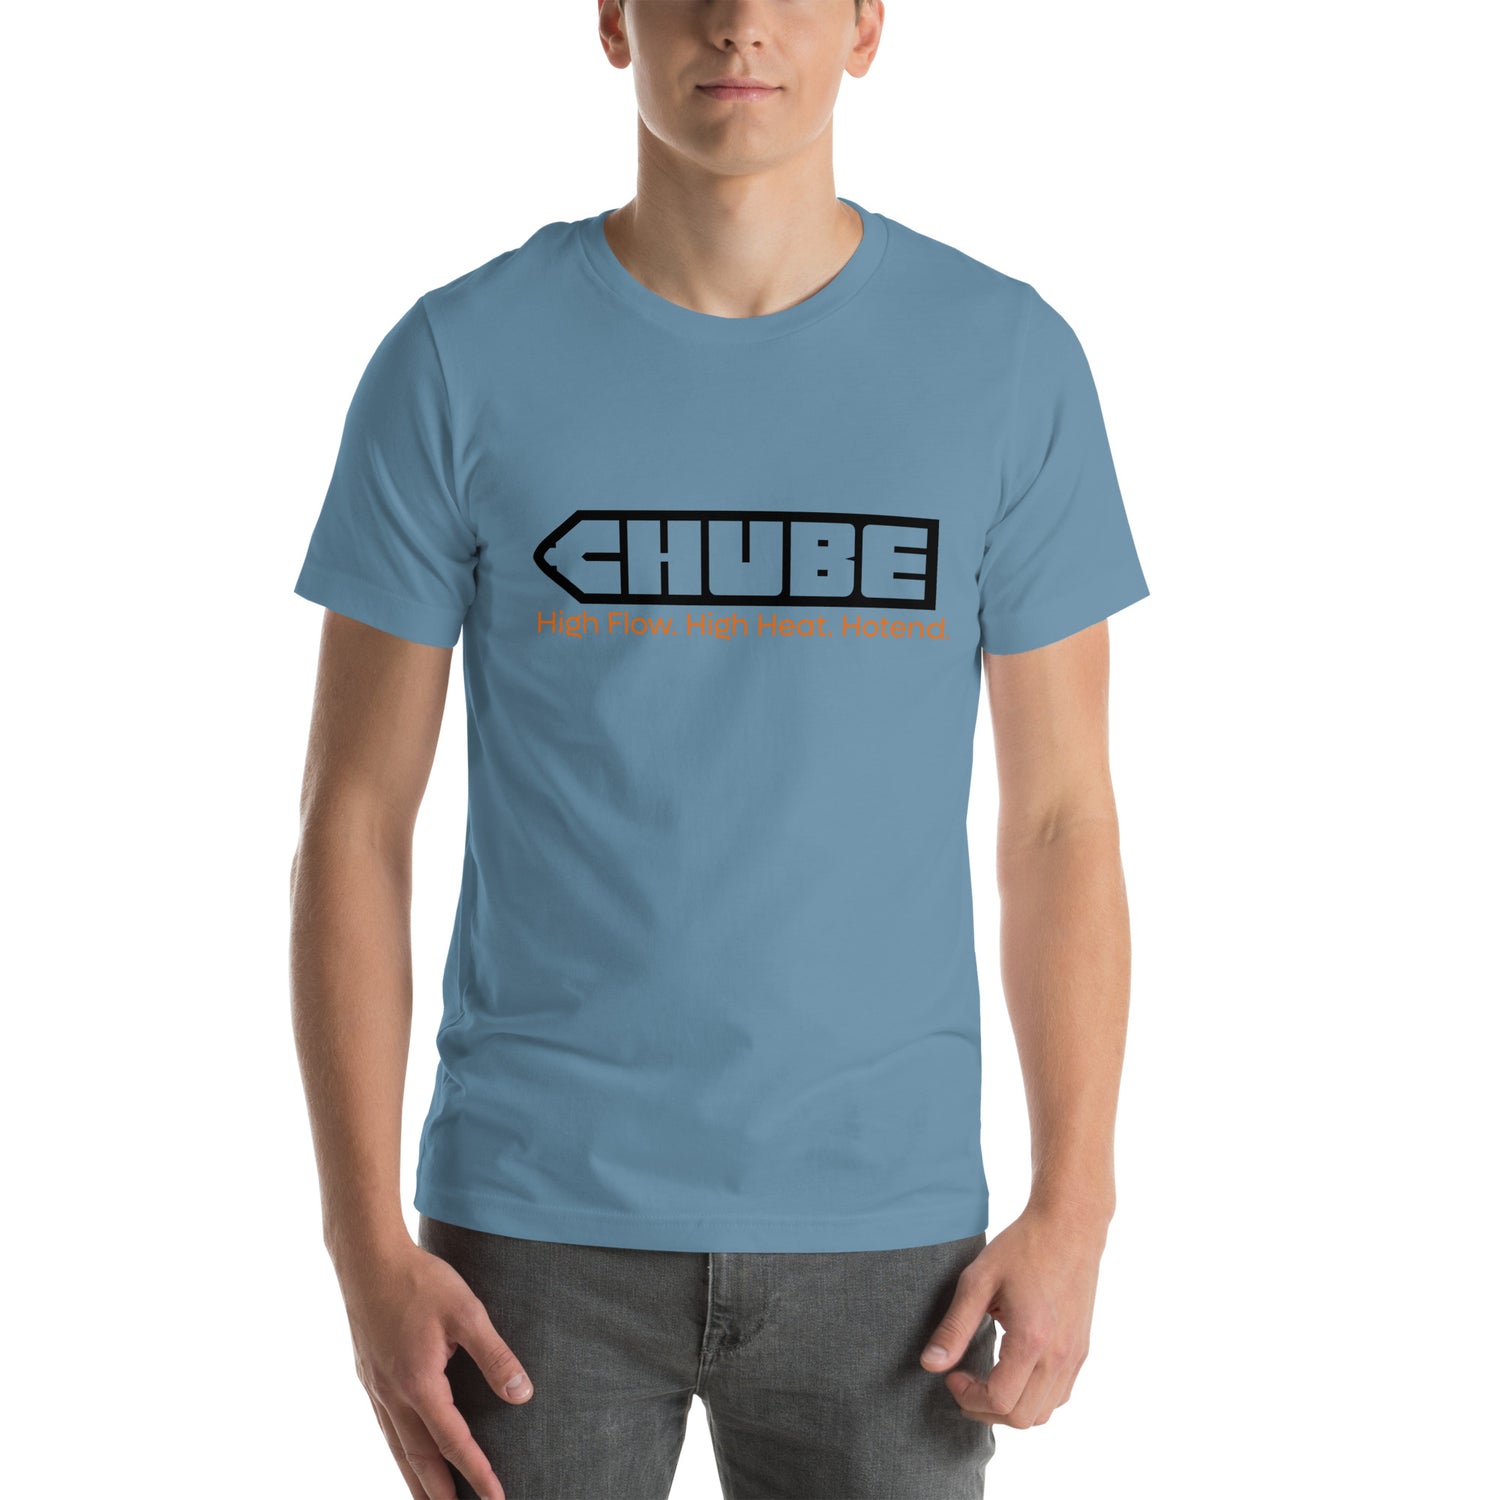 Unisex t-shirt Chube edition